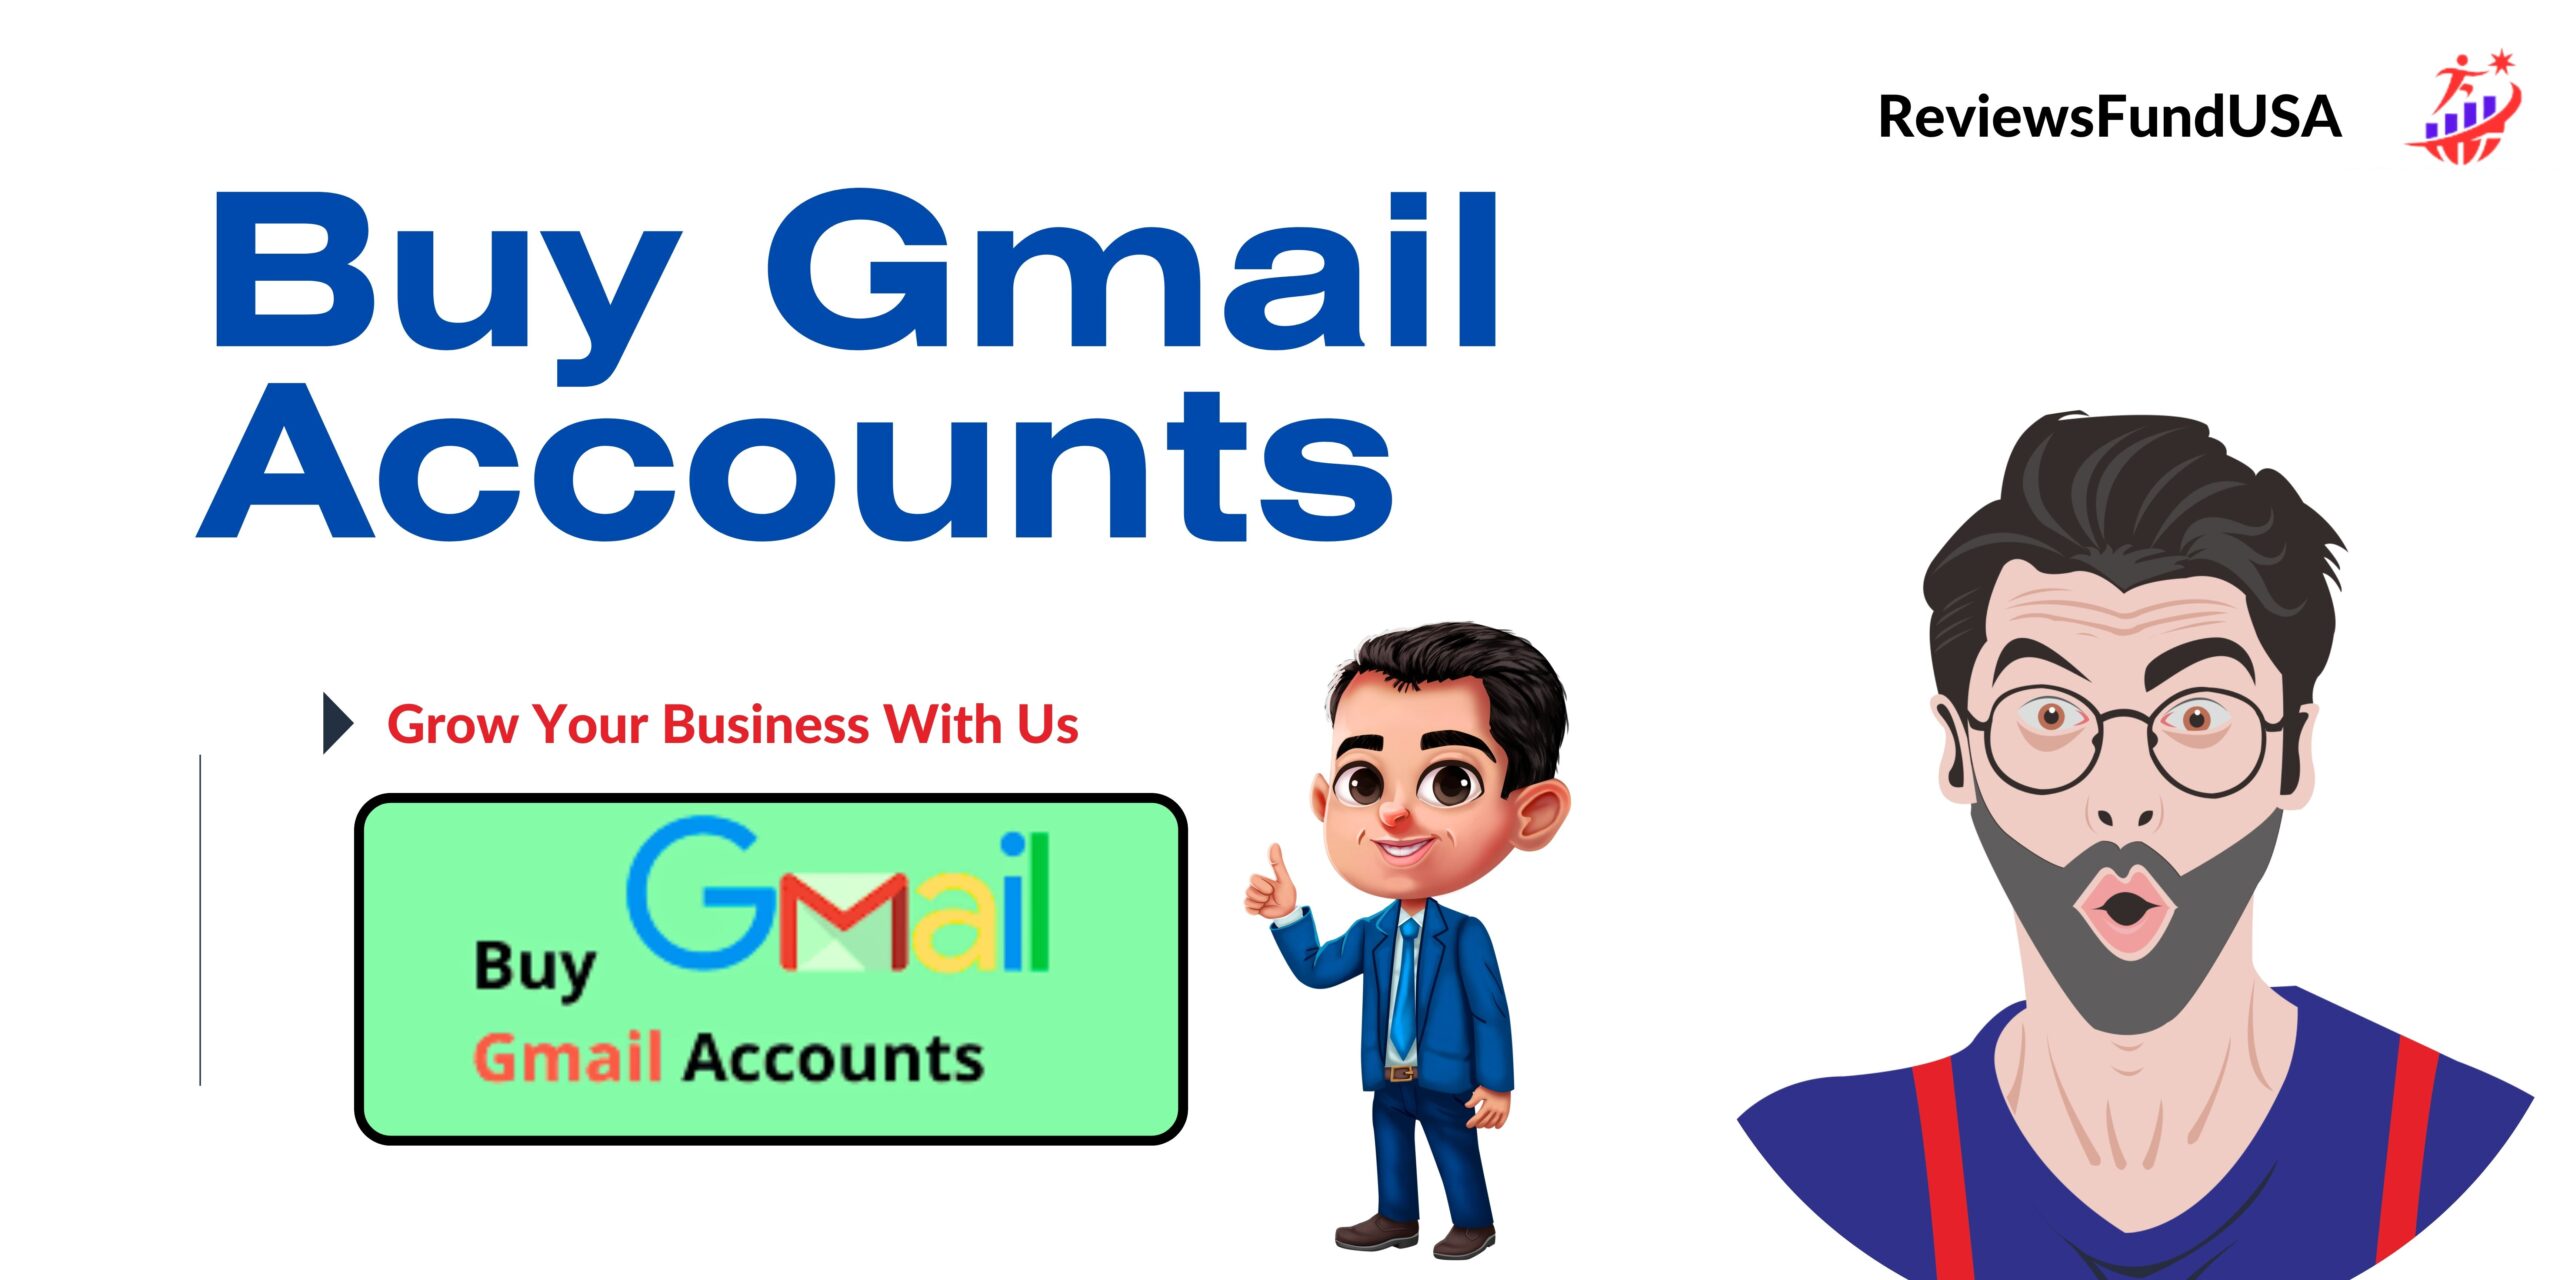 Buy Aged Gmail Accounts